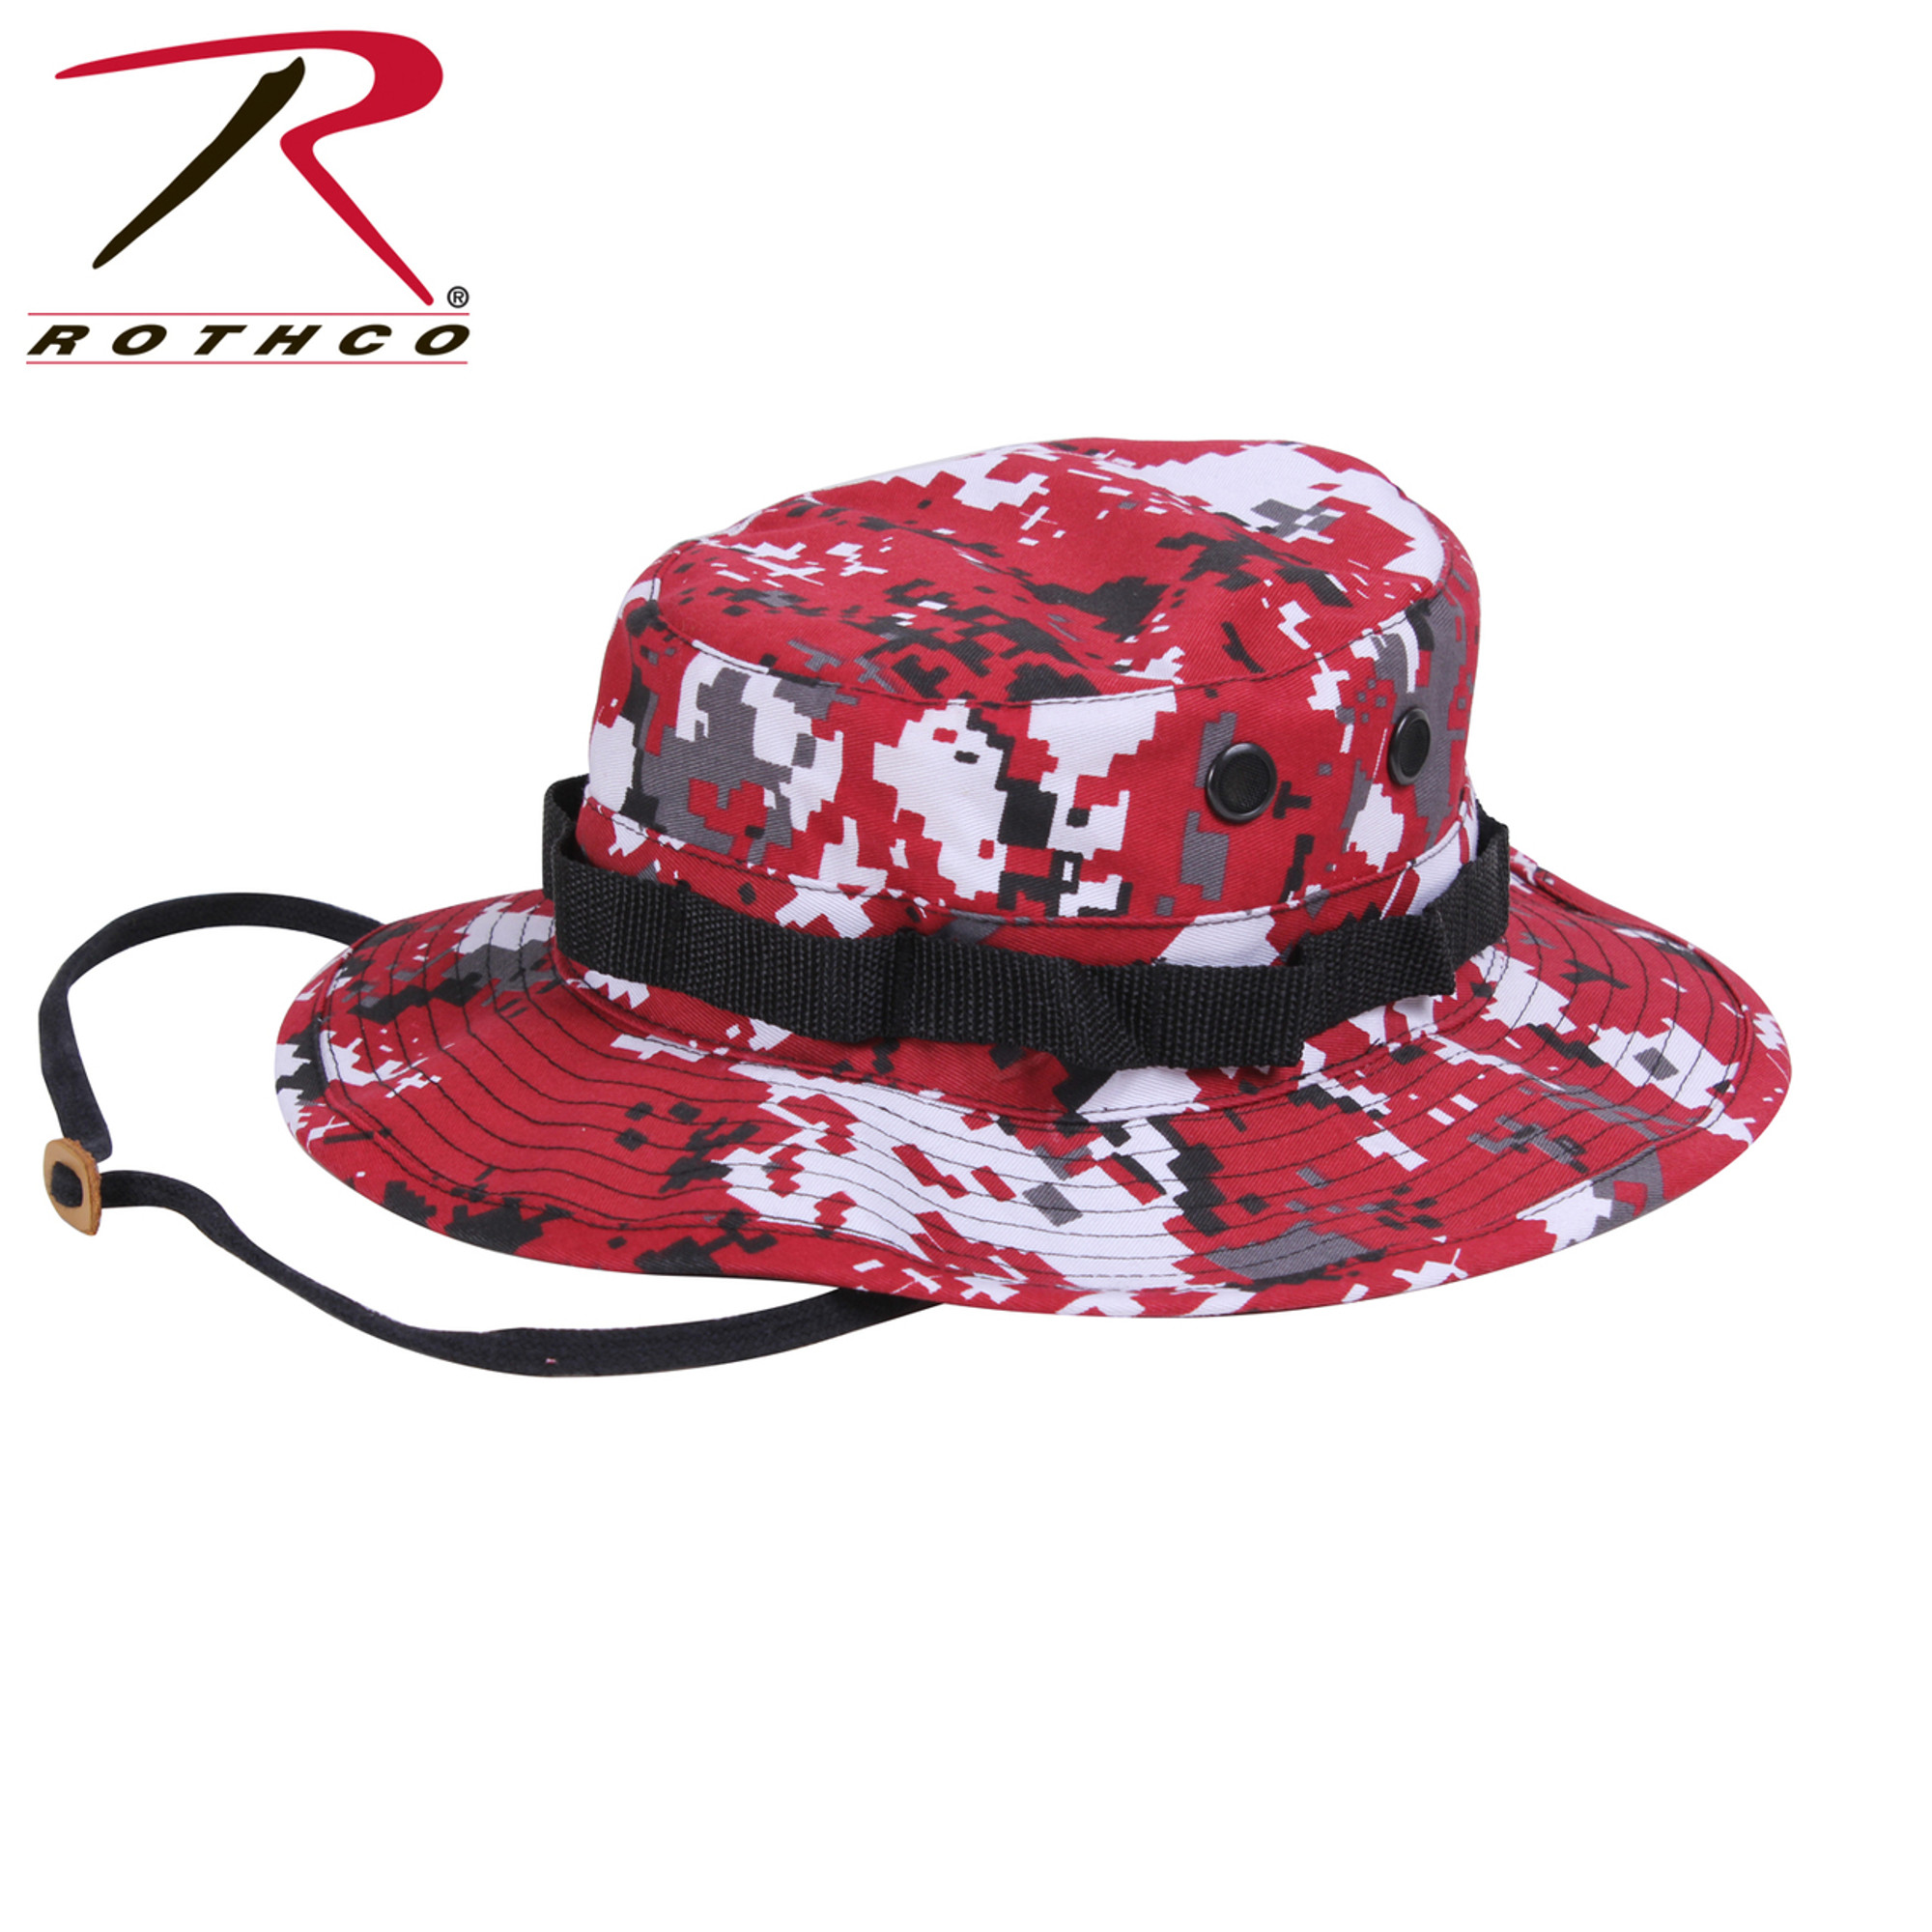 Rothco Digital Camo Boonie Hat - Red Digital